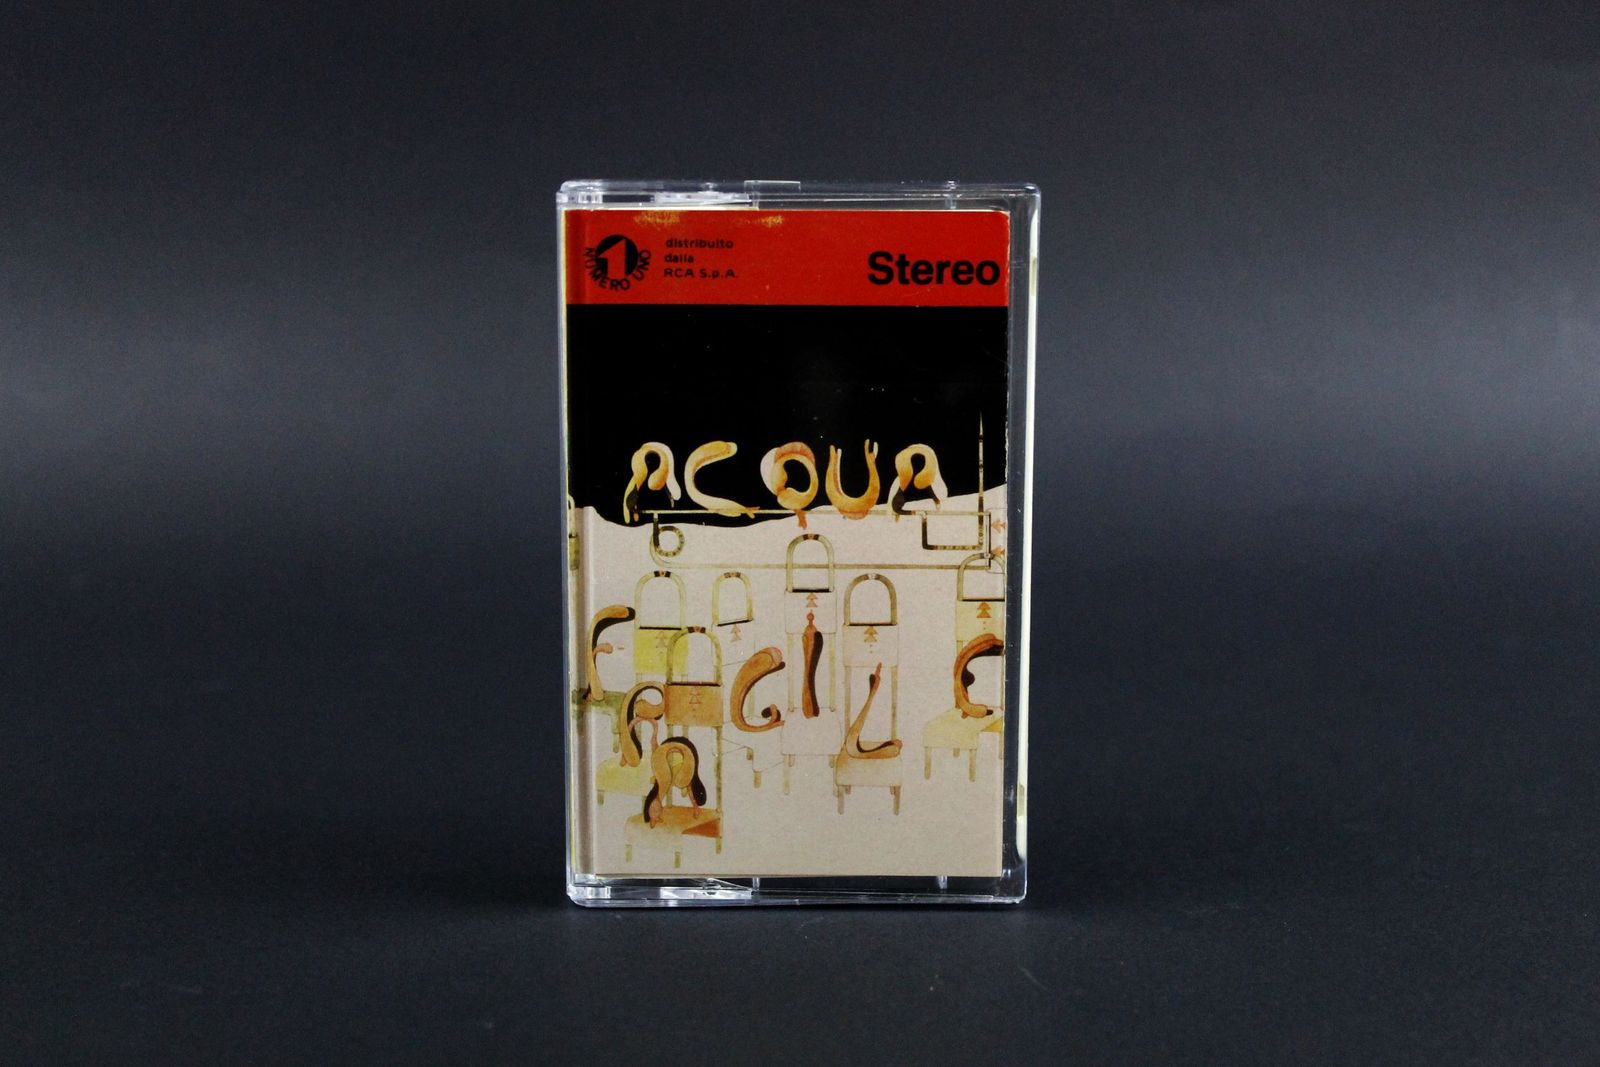 Custodia standard trasparente di ricambio in plastica per cassette musicali